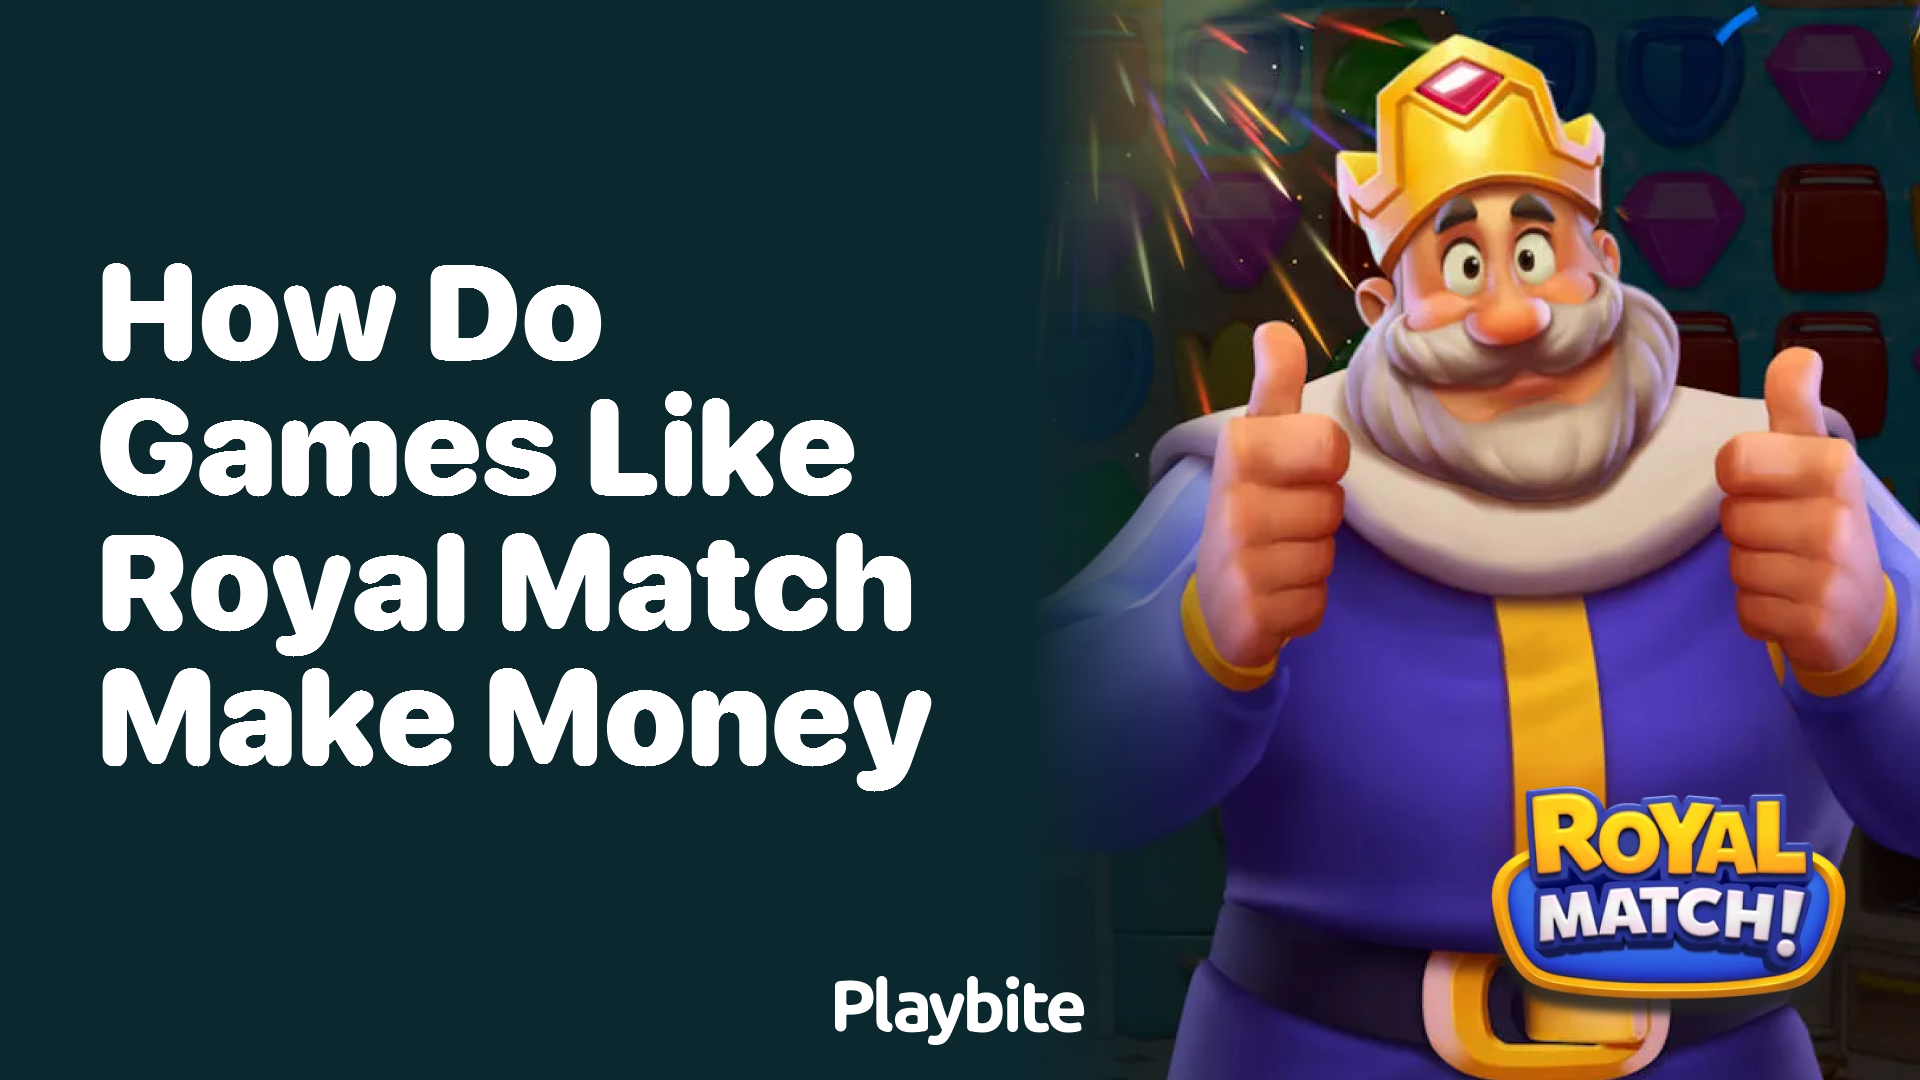 How Do Games Like Royal Match Make Money?